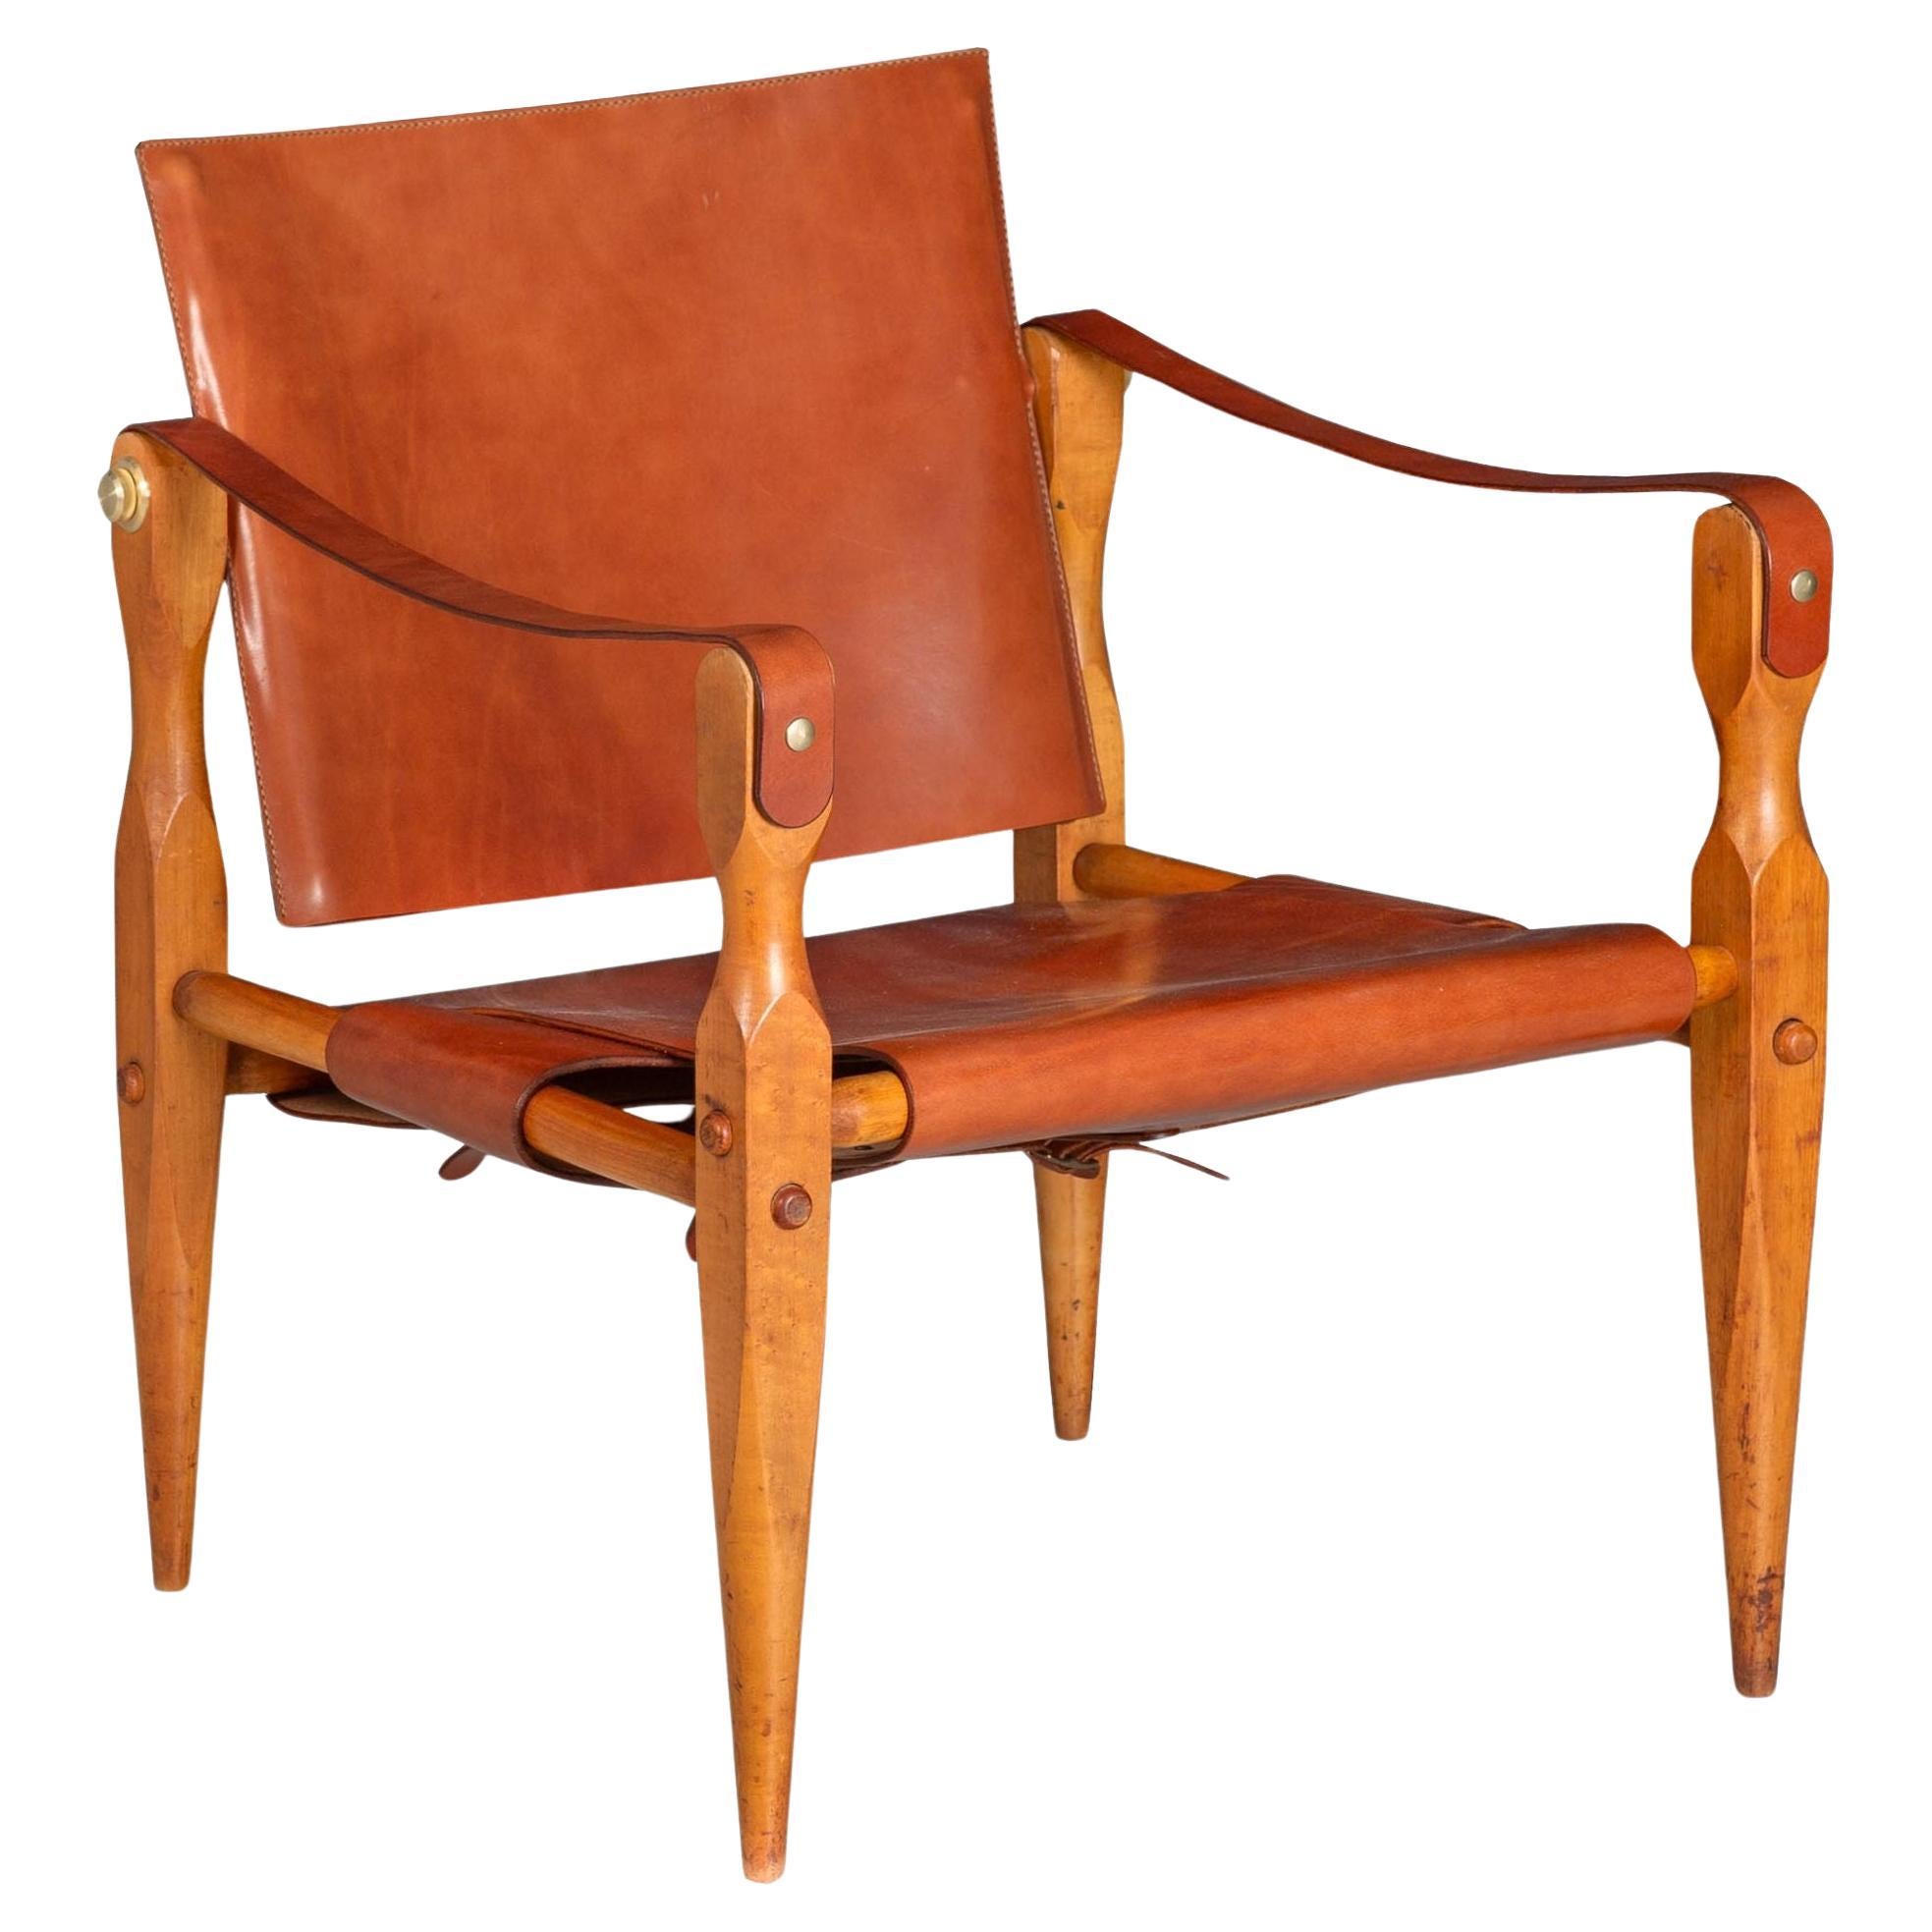 Circa 1970 Mid-Century Modern Leather Safari Chair attr. to Wilhelm Kienzle For Sale